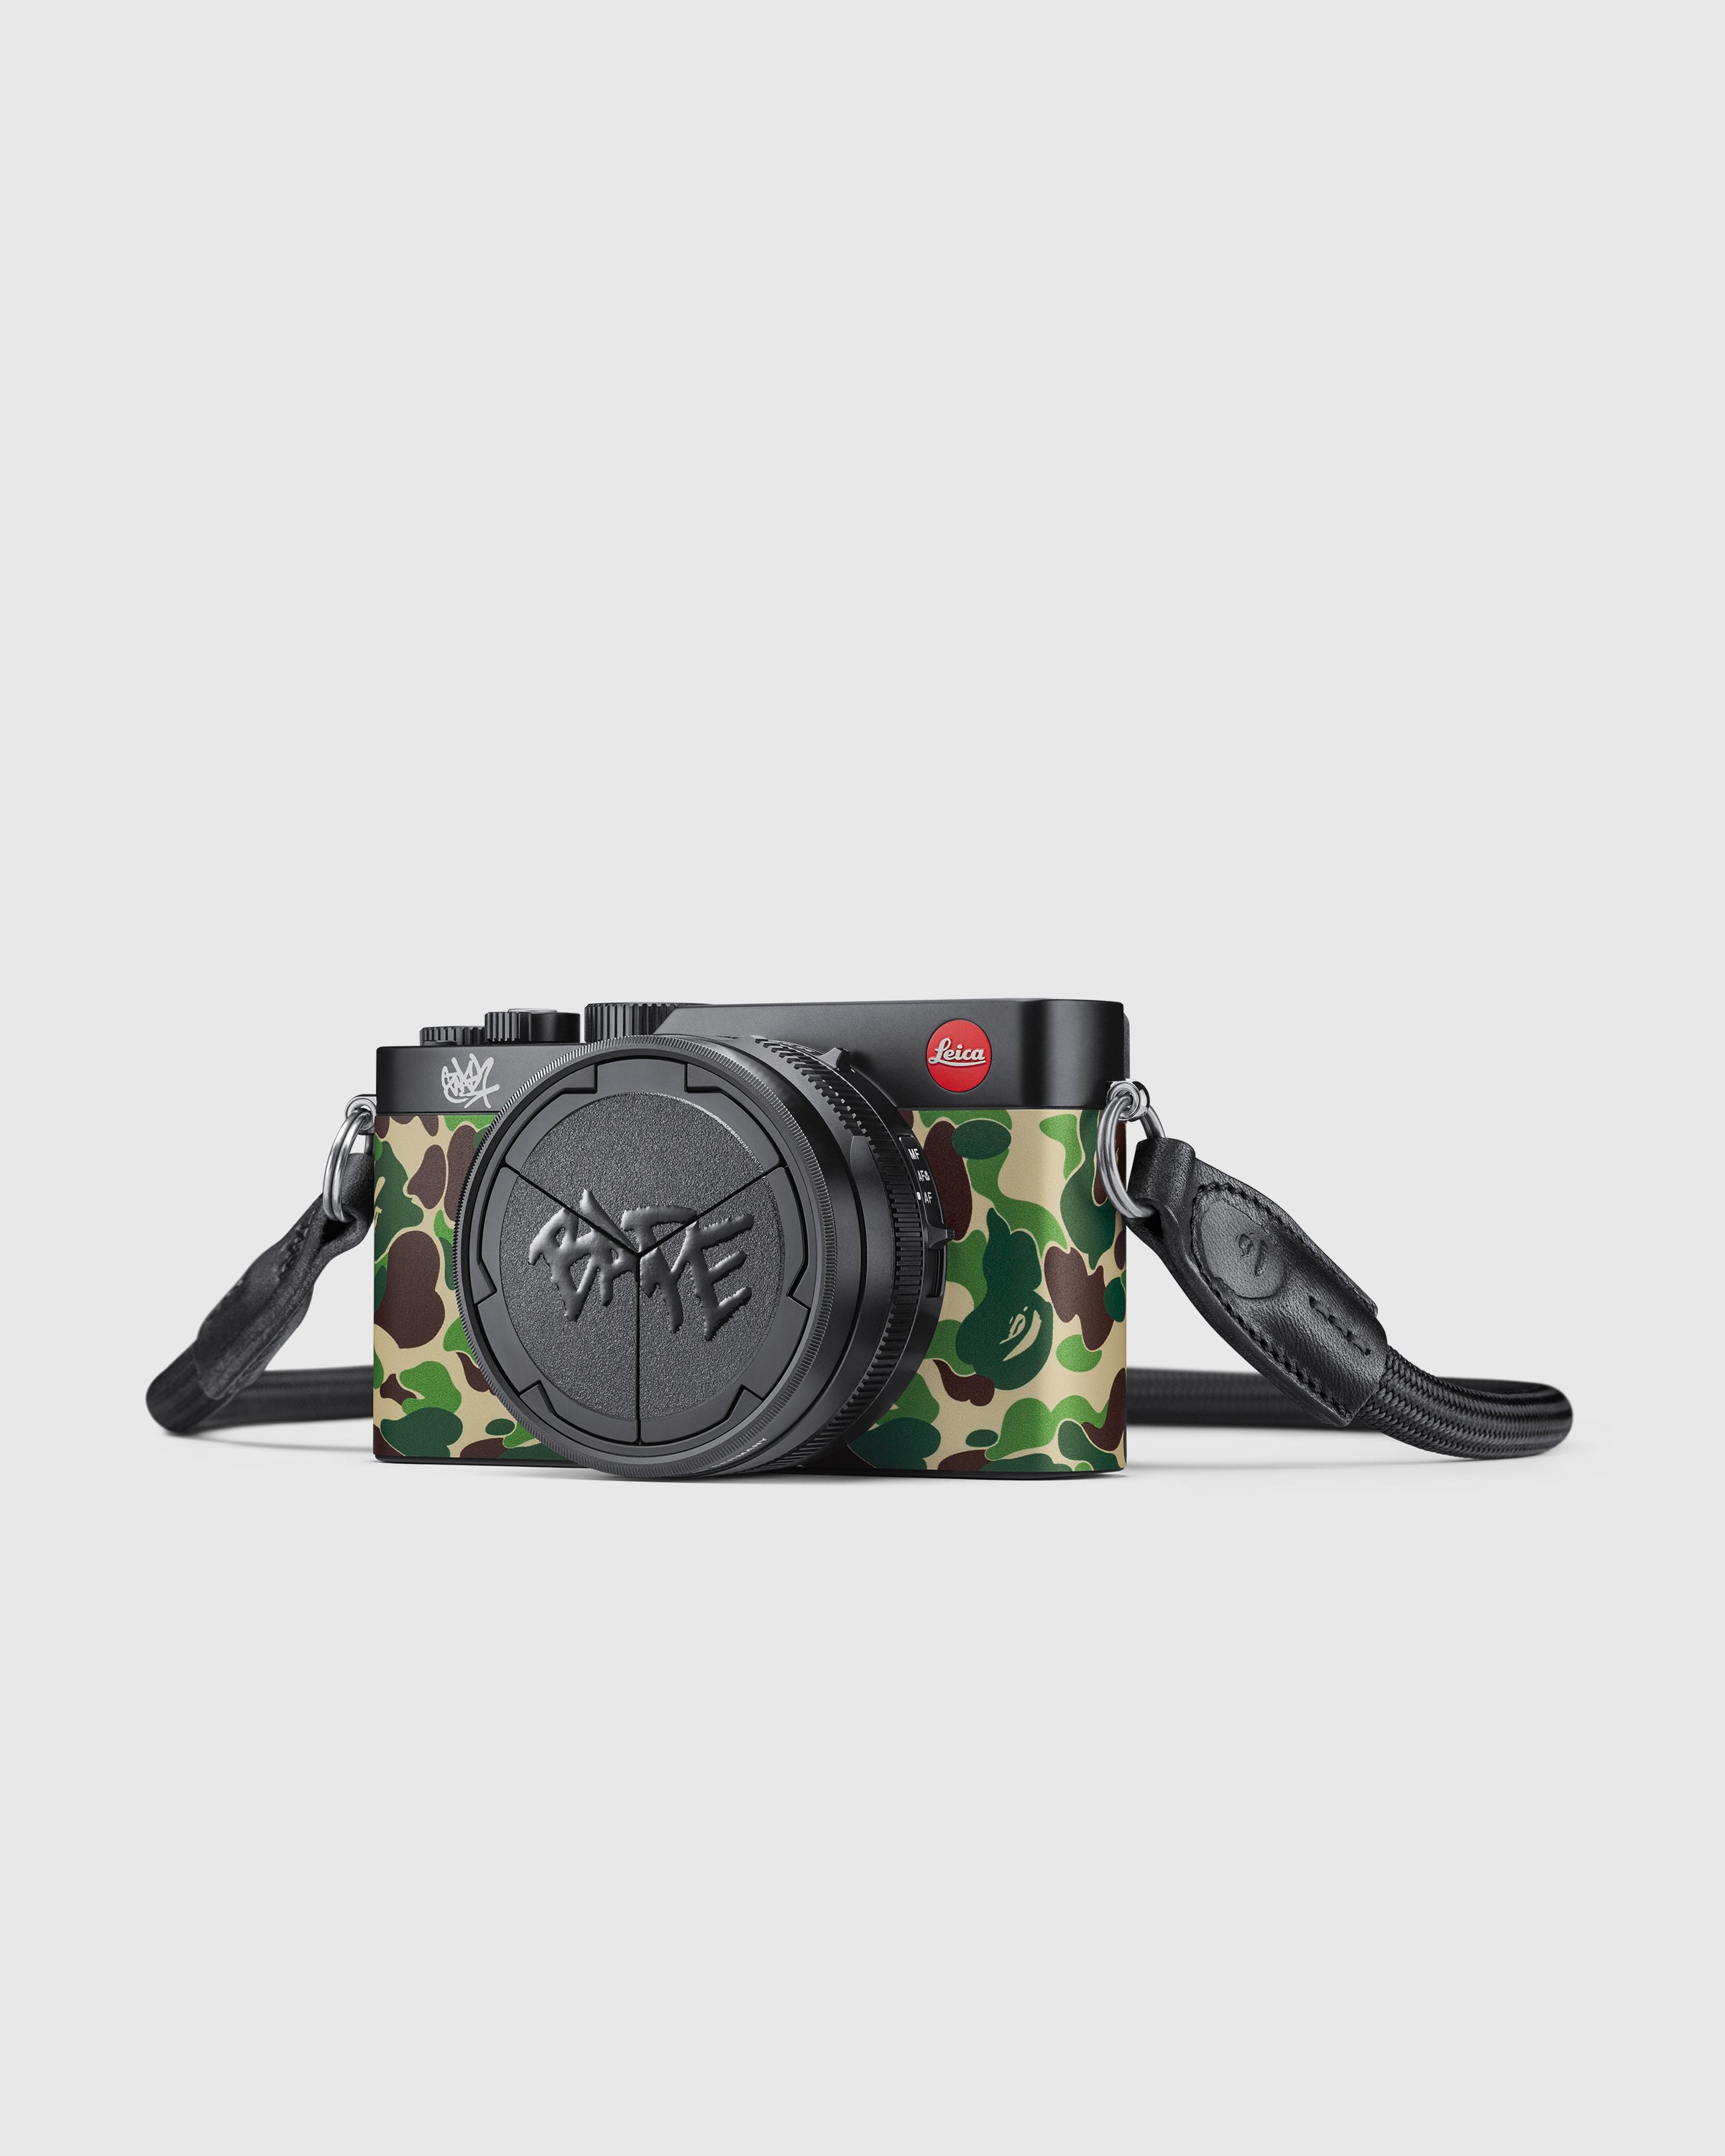 Leica - D-Lux 7 “A BATHING APE® x STASH” Edition Black - Lifestyle - Multi - Image 3